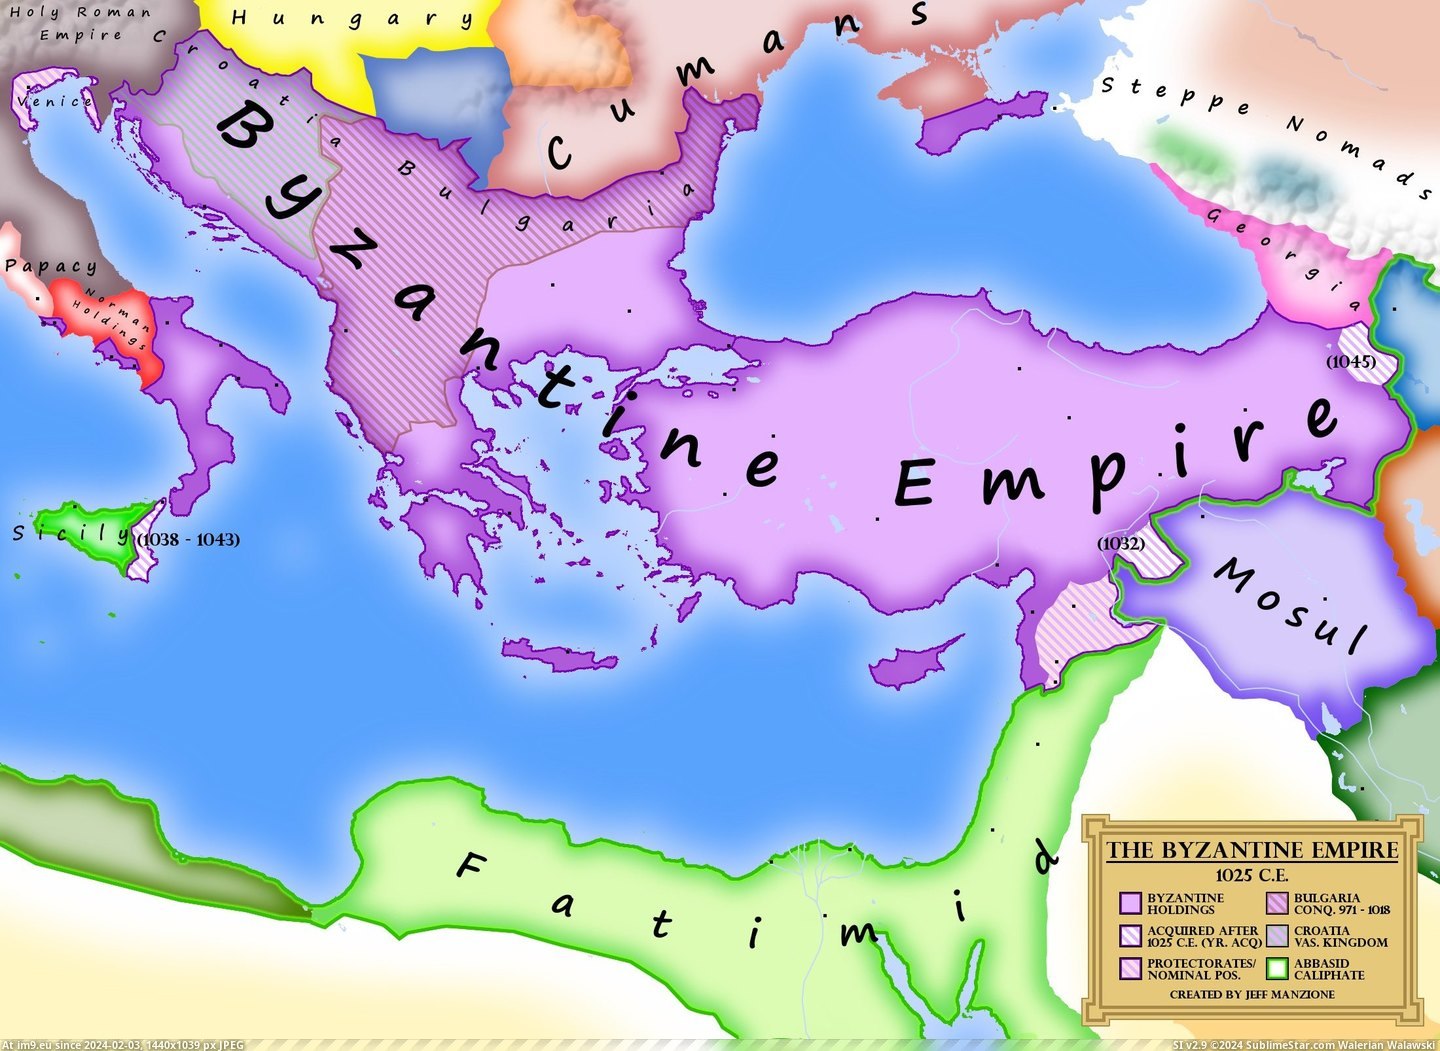 #Empire  #Byzantine [Mapporn] Byzantine Empire at 1025 A.D. made by me [2200x1600] Pic. (Bild von album My r/MAPS favs))